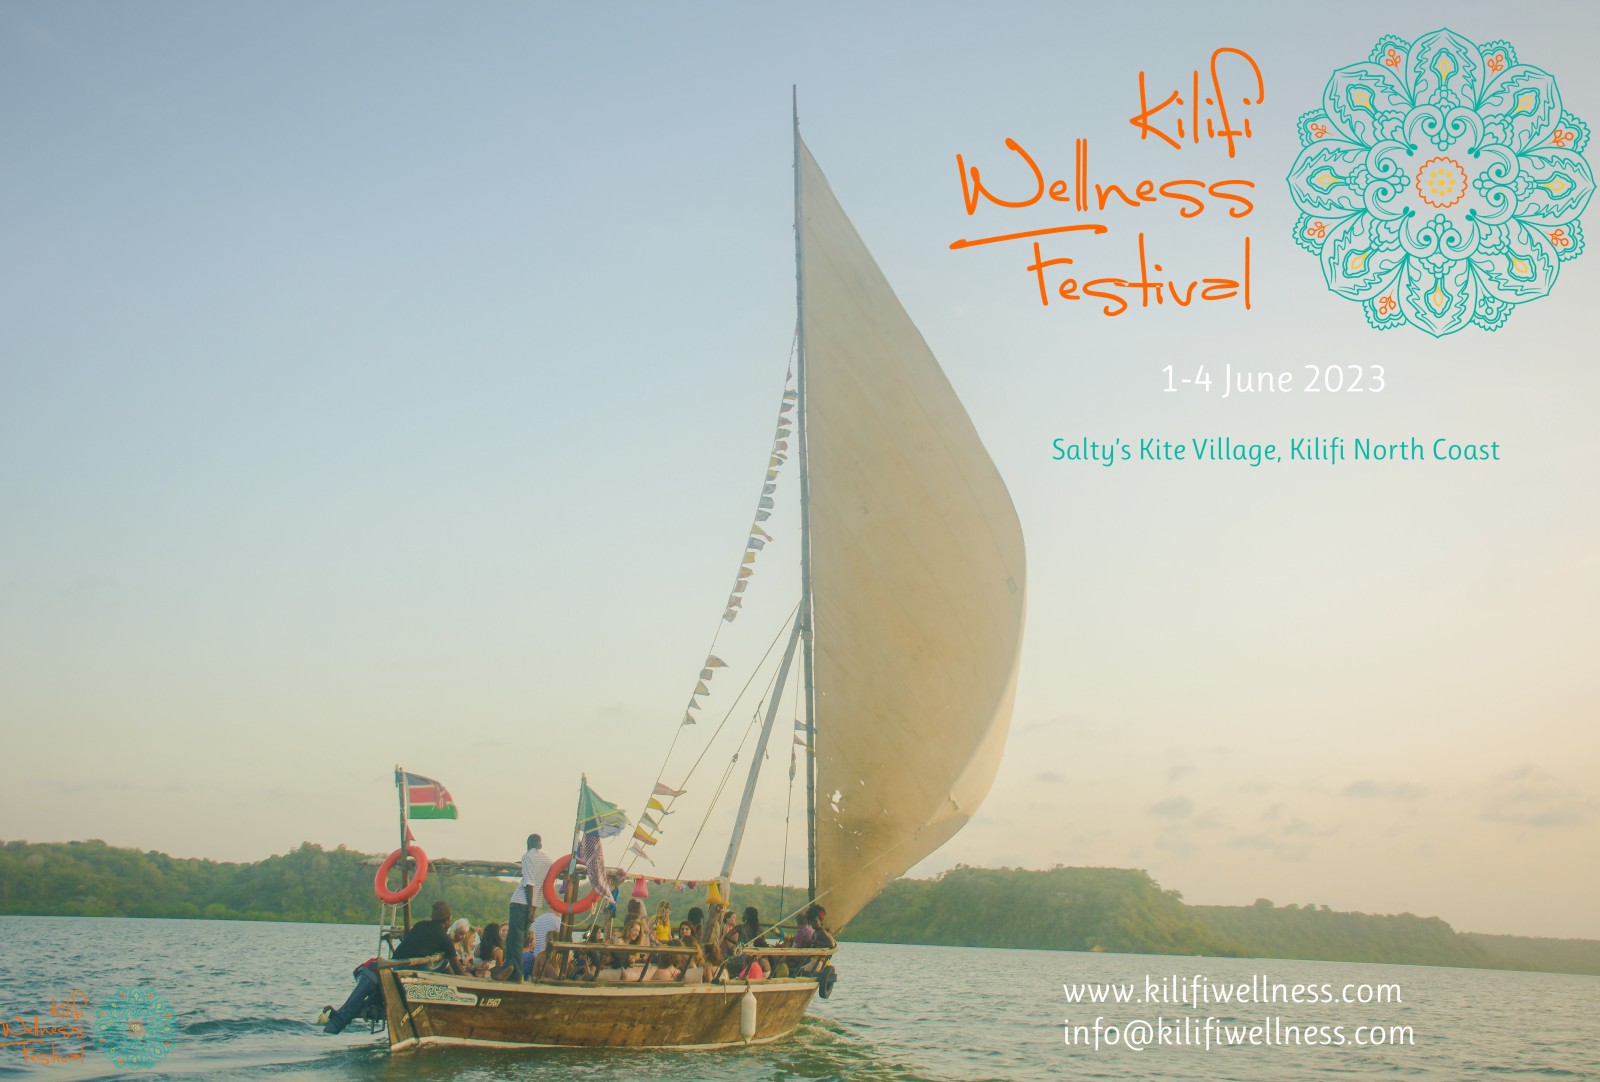 Kilifi Wellness Festival and Kilifi Bay Beach Resort